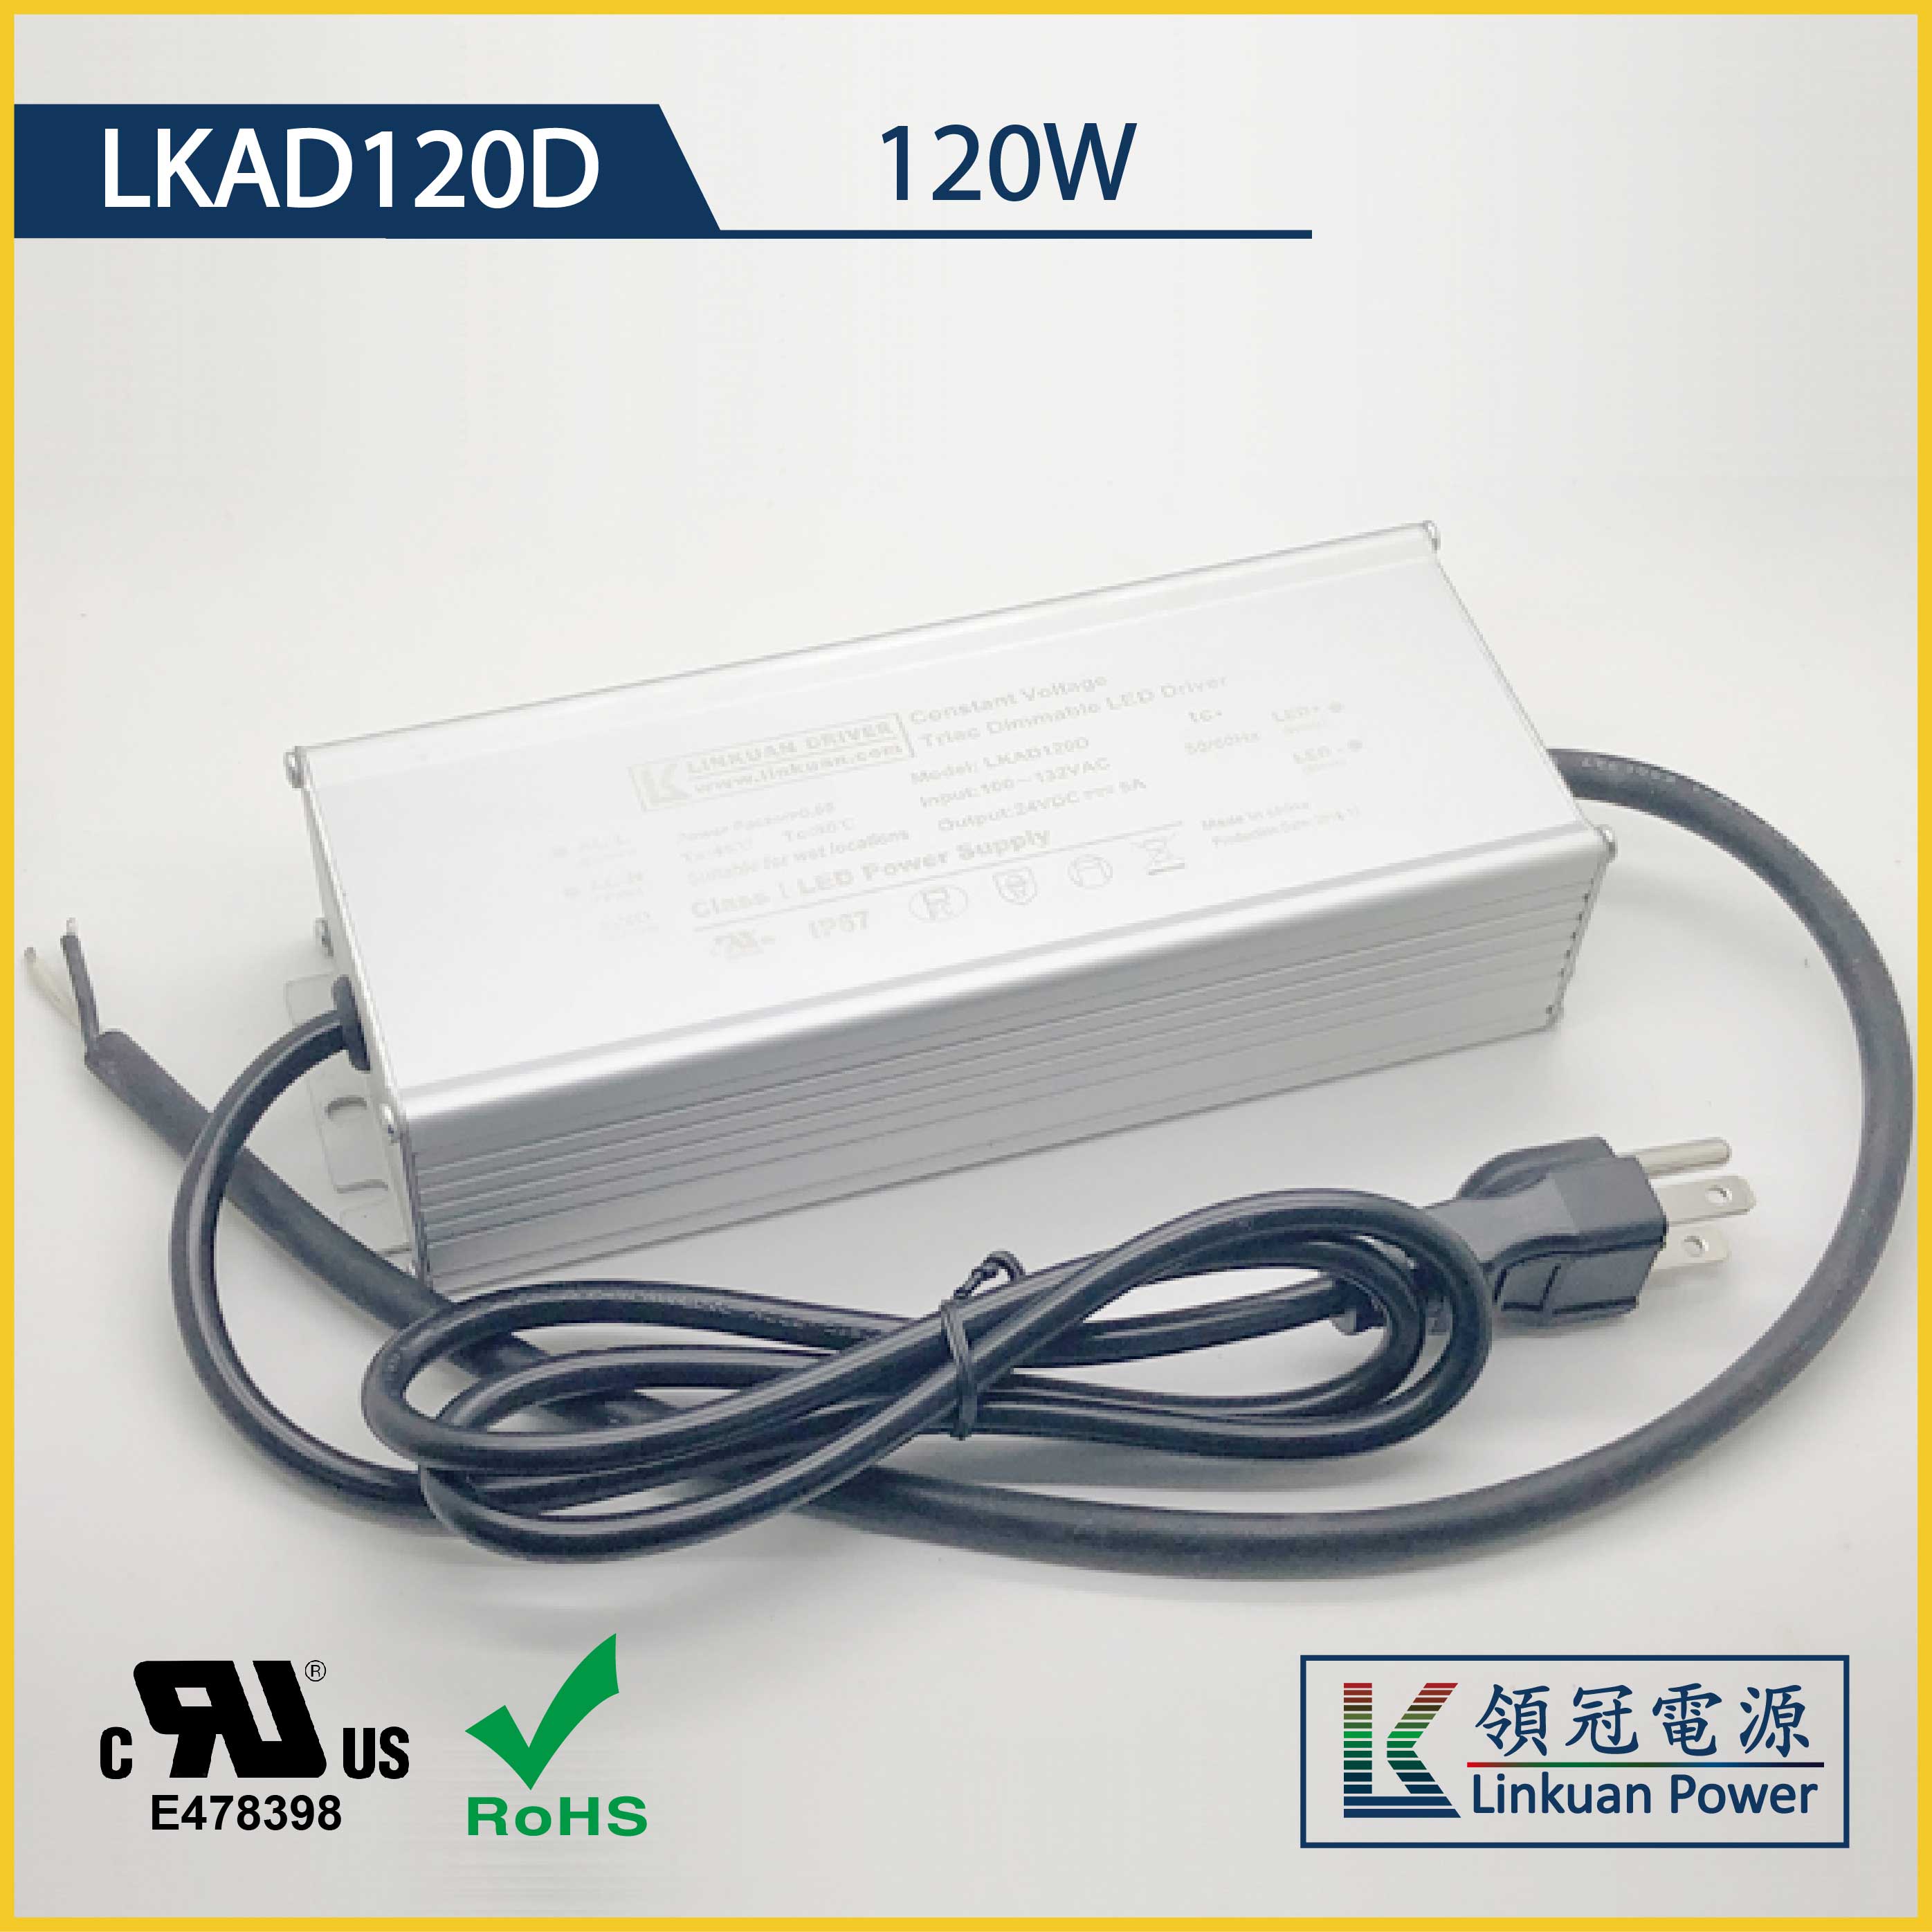 LKAD120D 120W Constant Voltage 12/24V 10A/5A Triac Dimming LED drivers